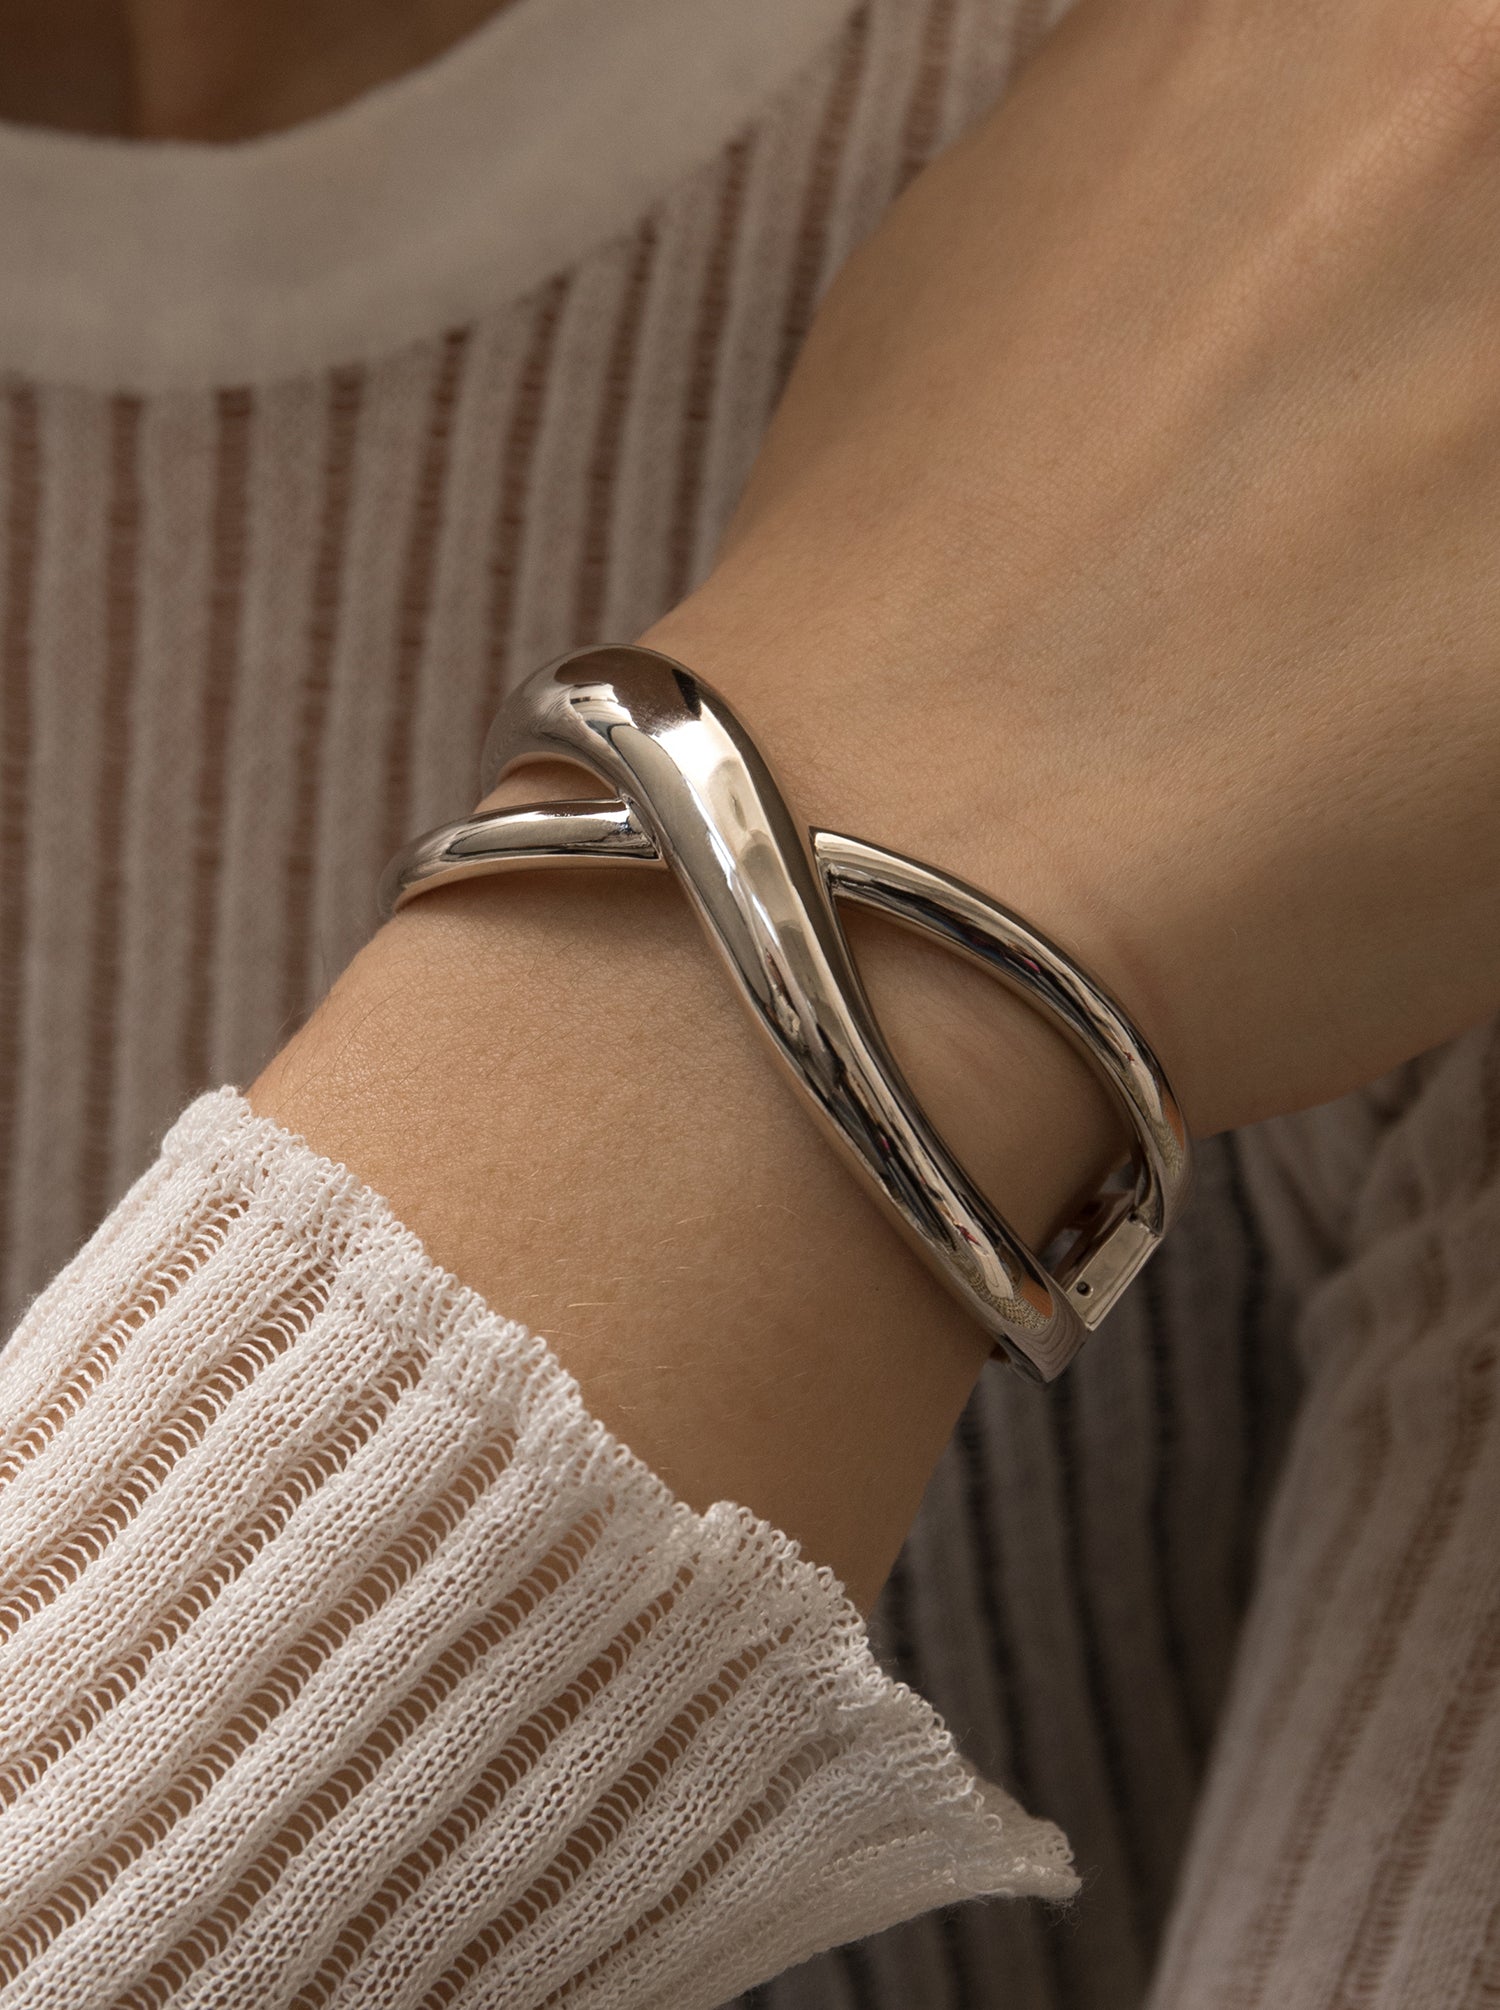 Bracelet bracelet double rail design in plain silver